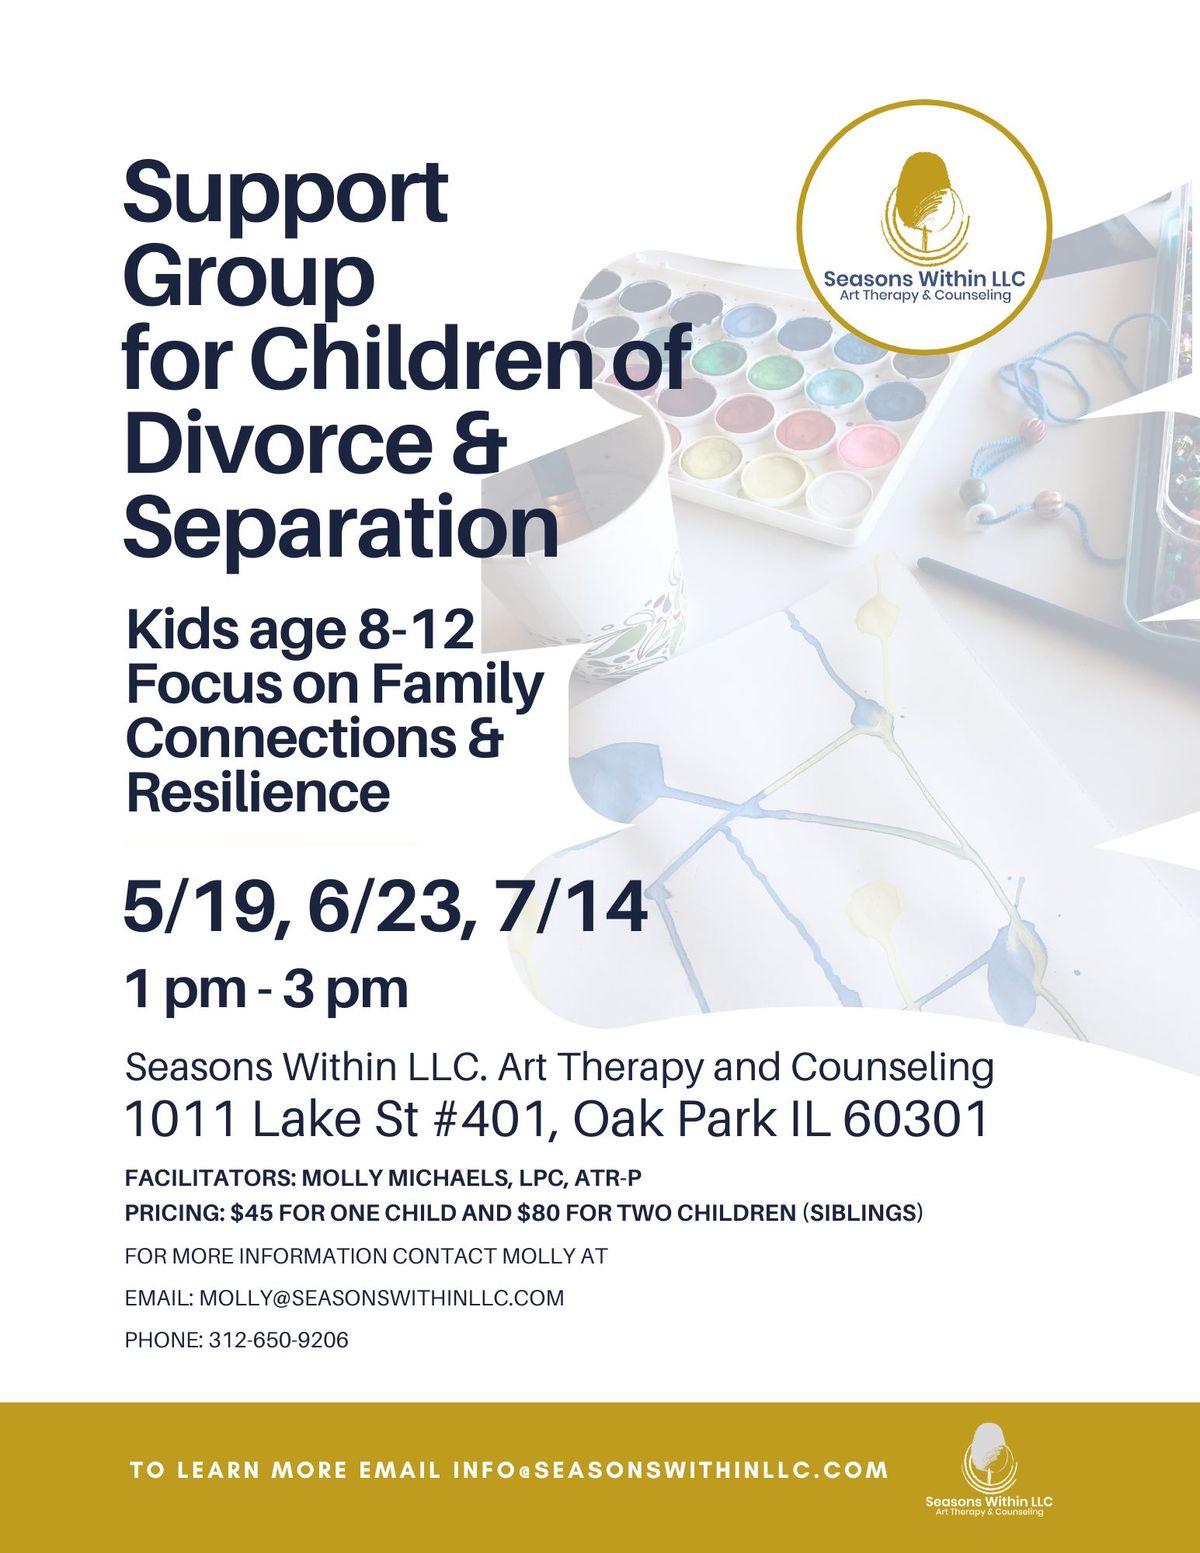 Children of Divorce & Separation Support Group